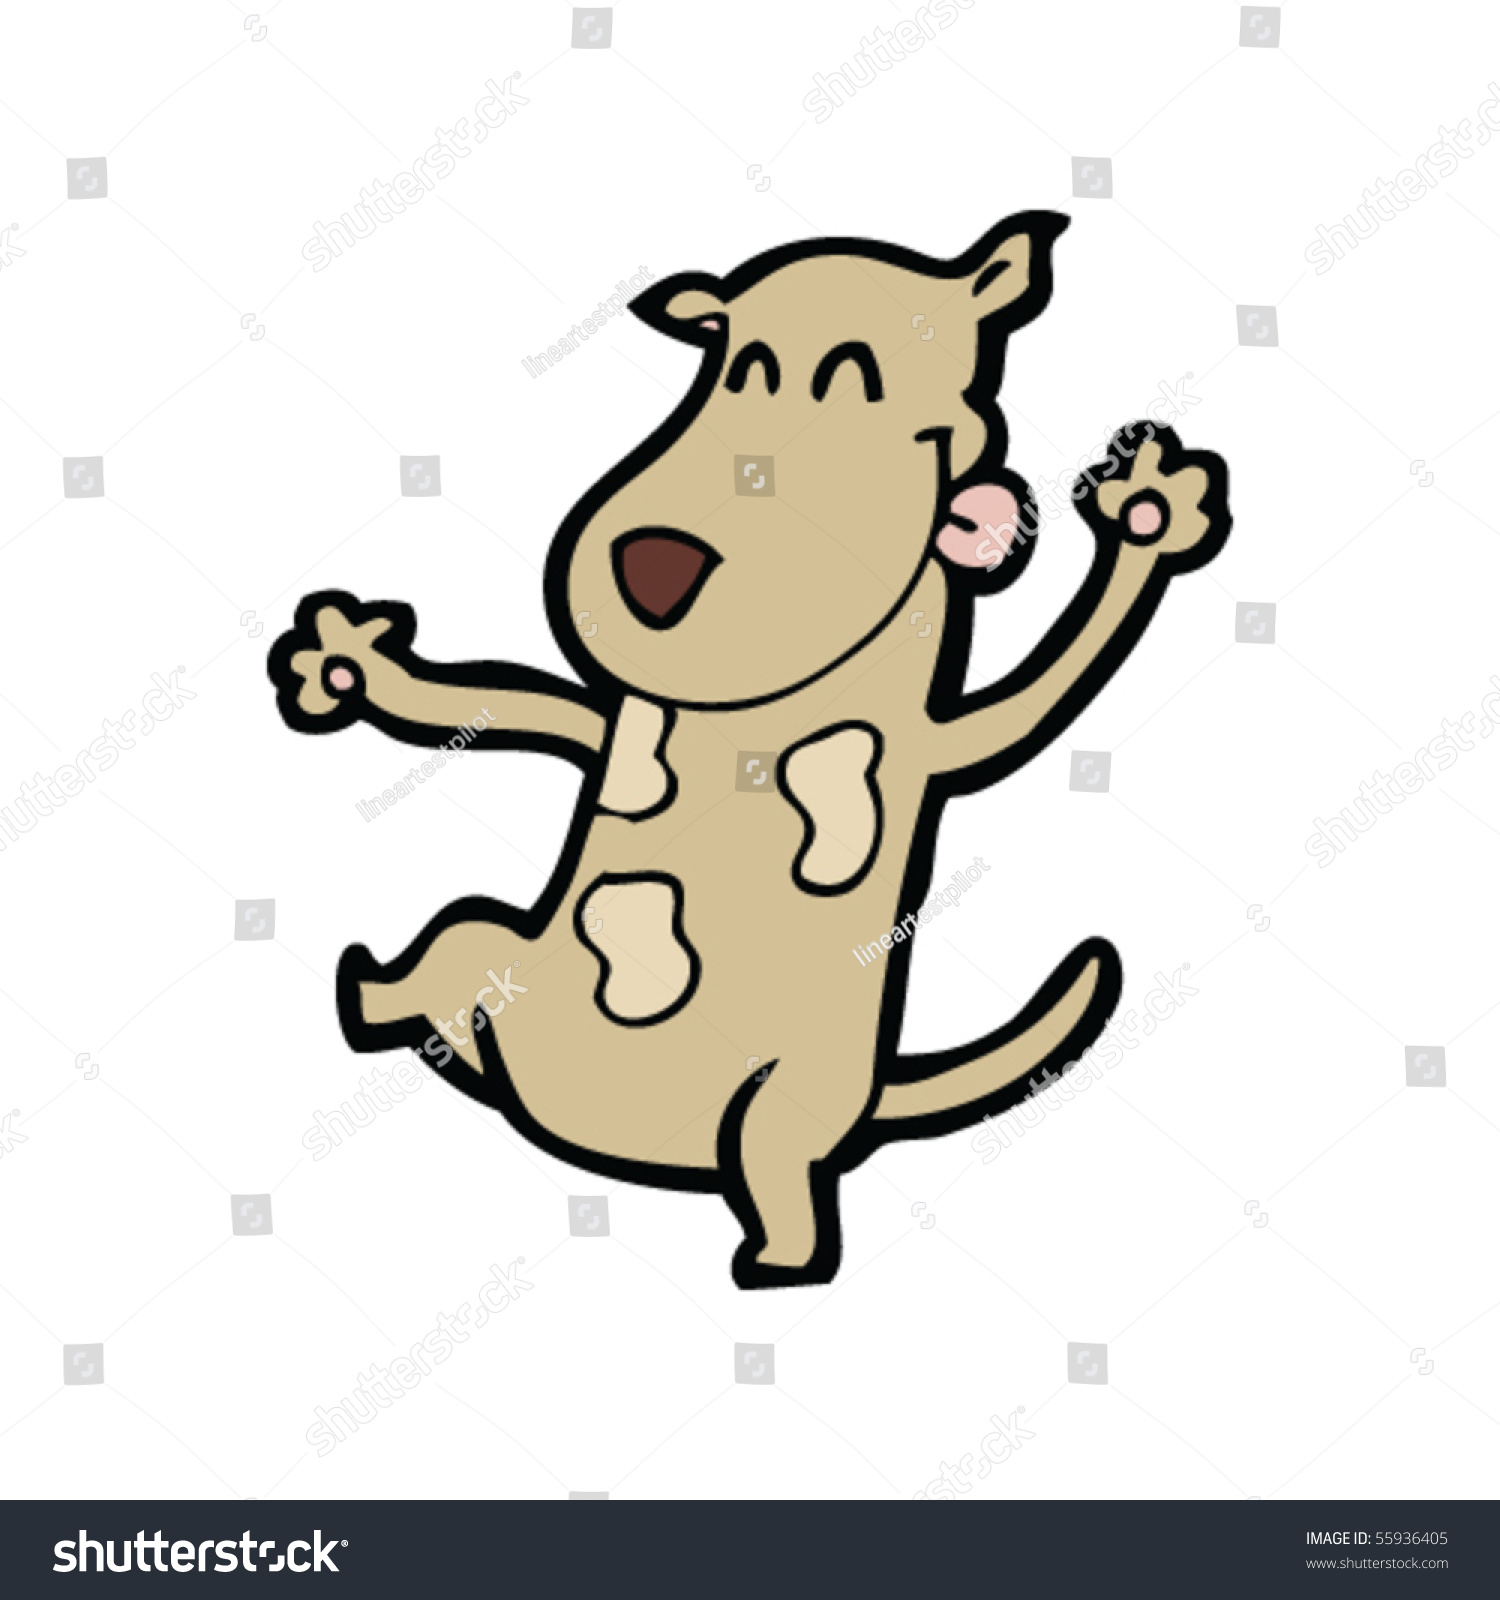 Dancing Dog Cartoon Stock Vector (Royalty Free) 55936405.